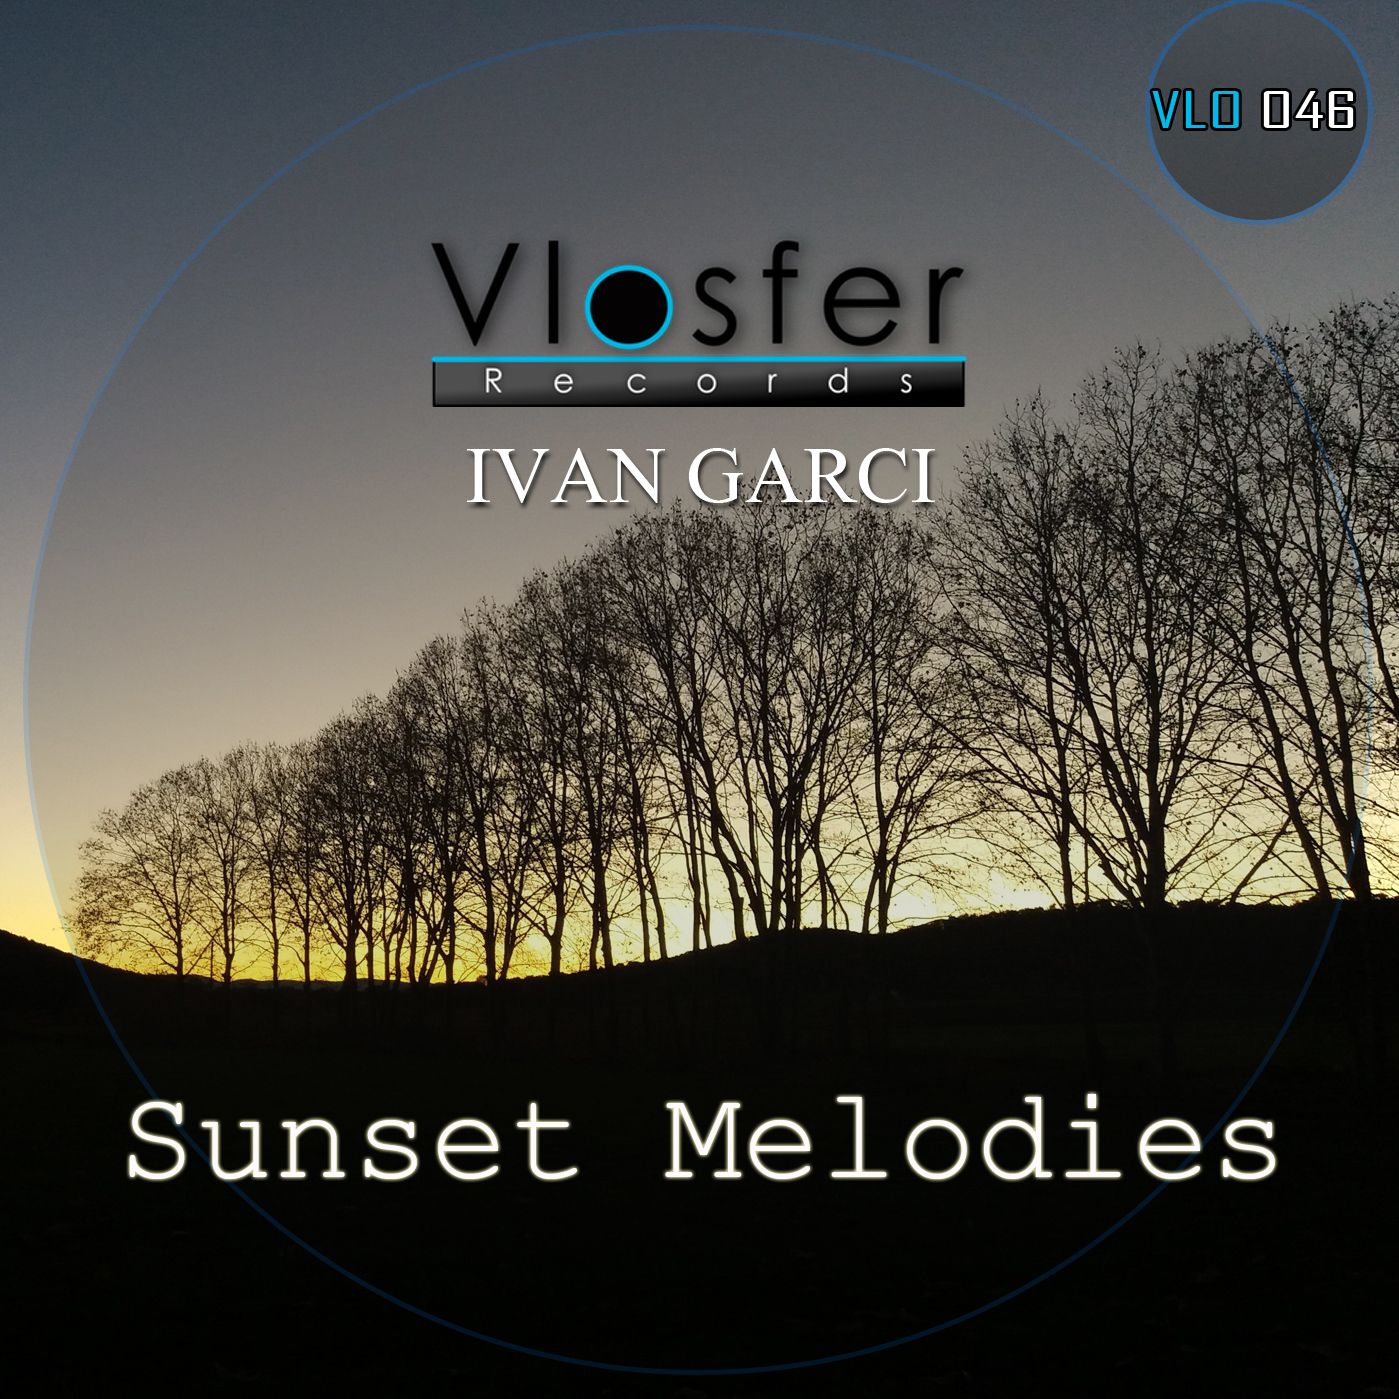 Ṣe igbasilẹ Clear - Ivan Garci (low quality sound) Vlosfer records.